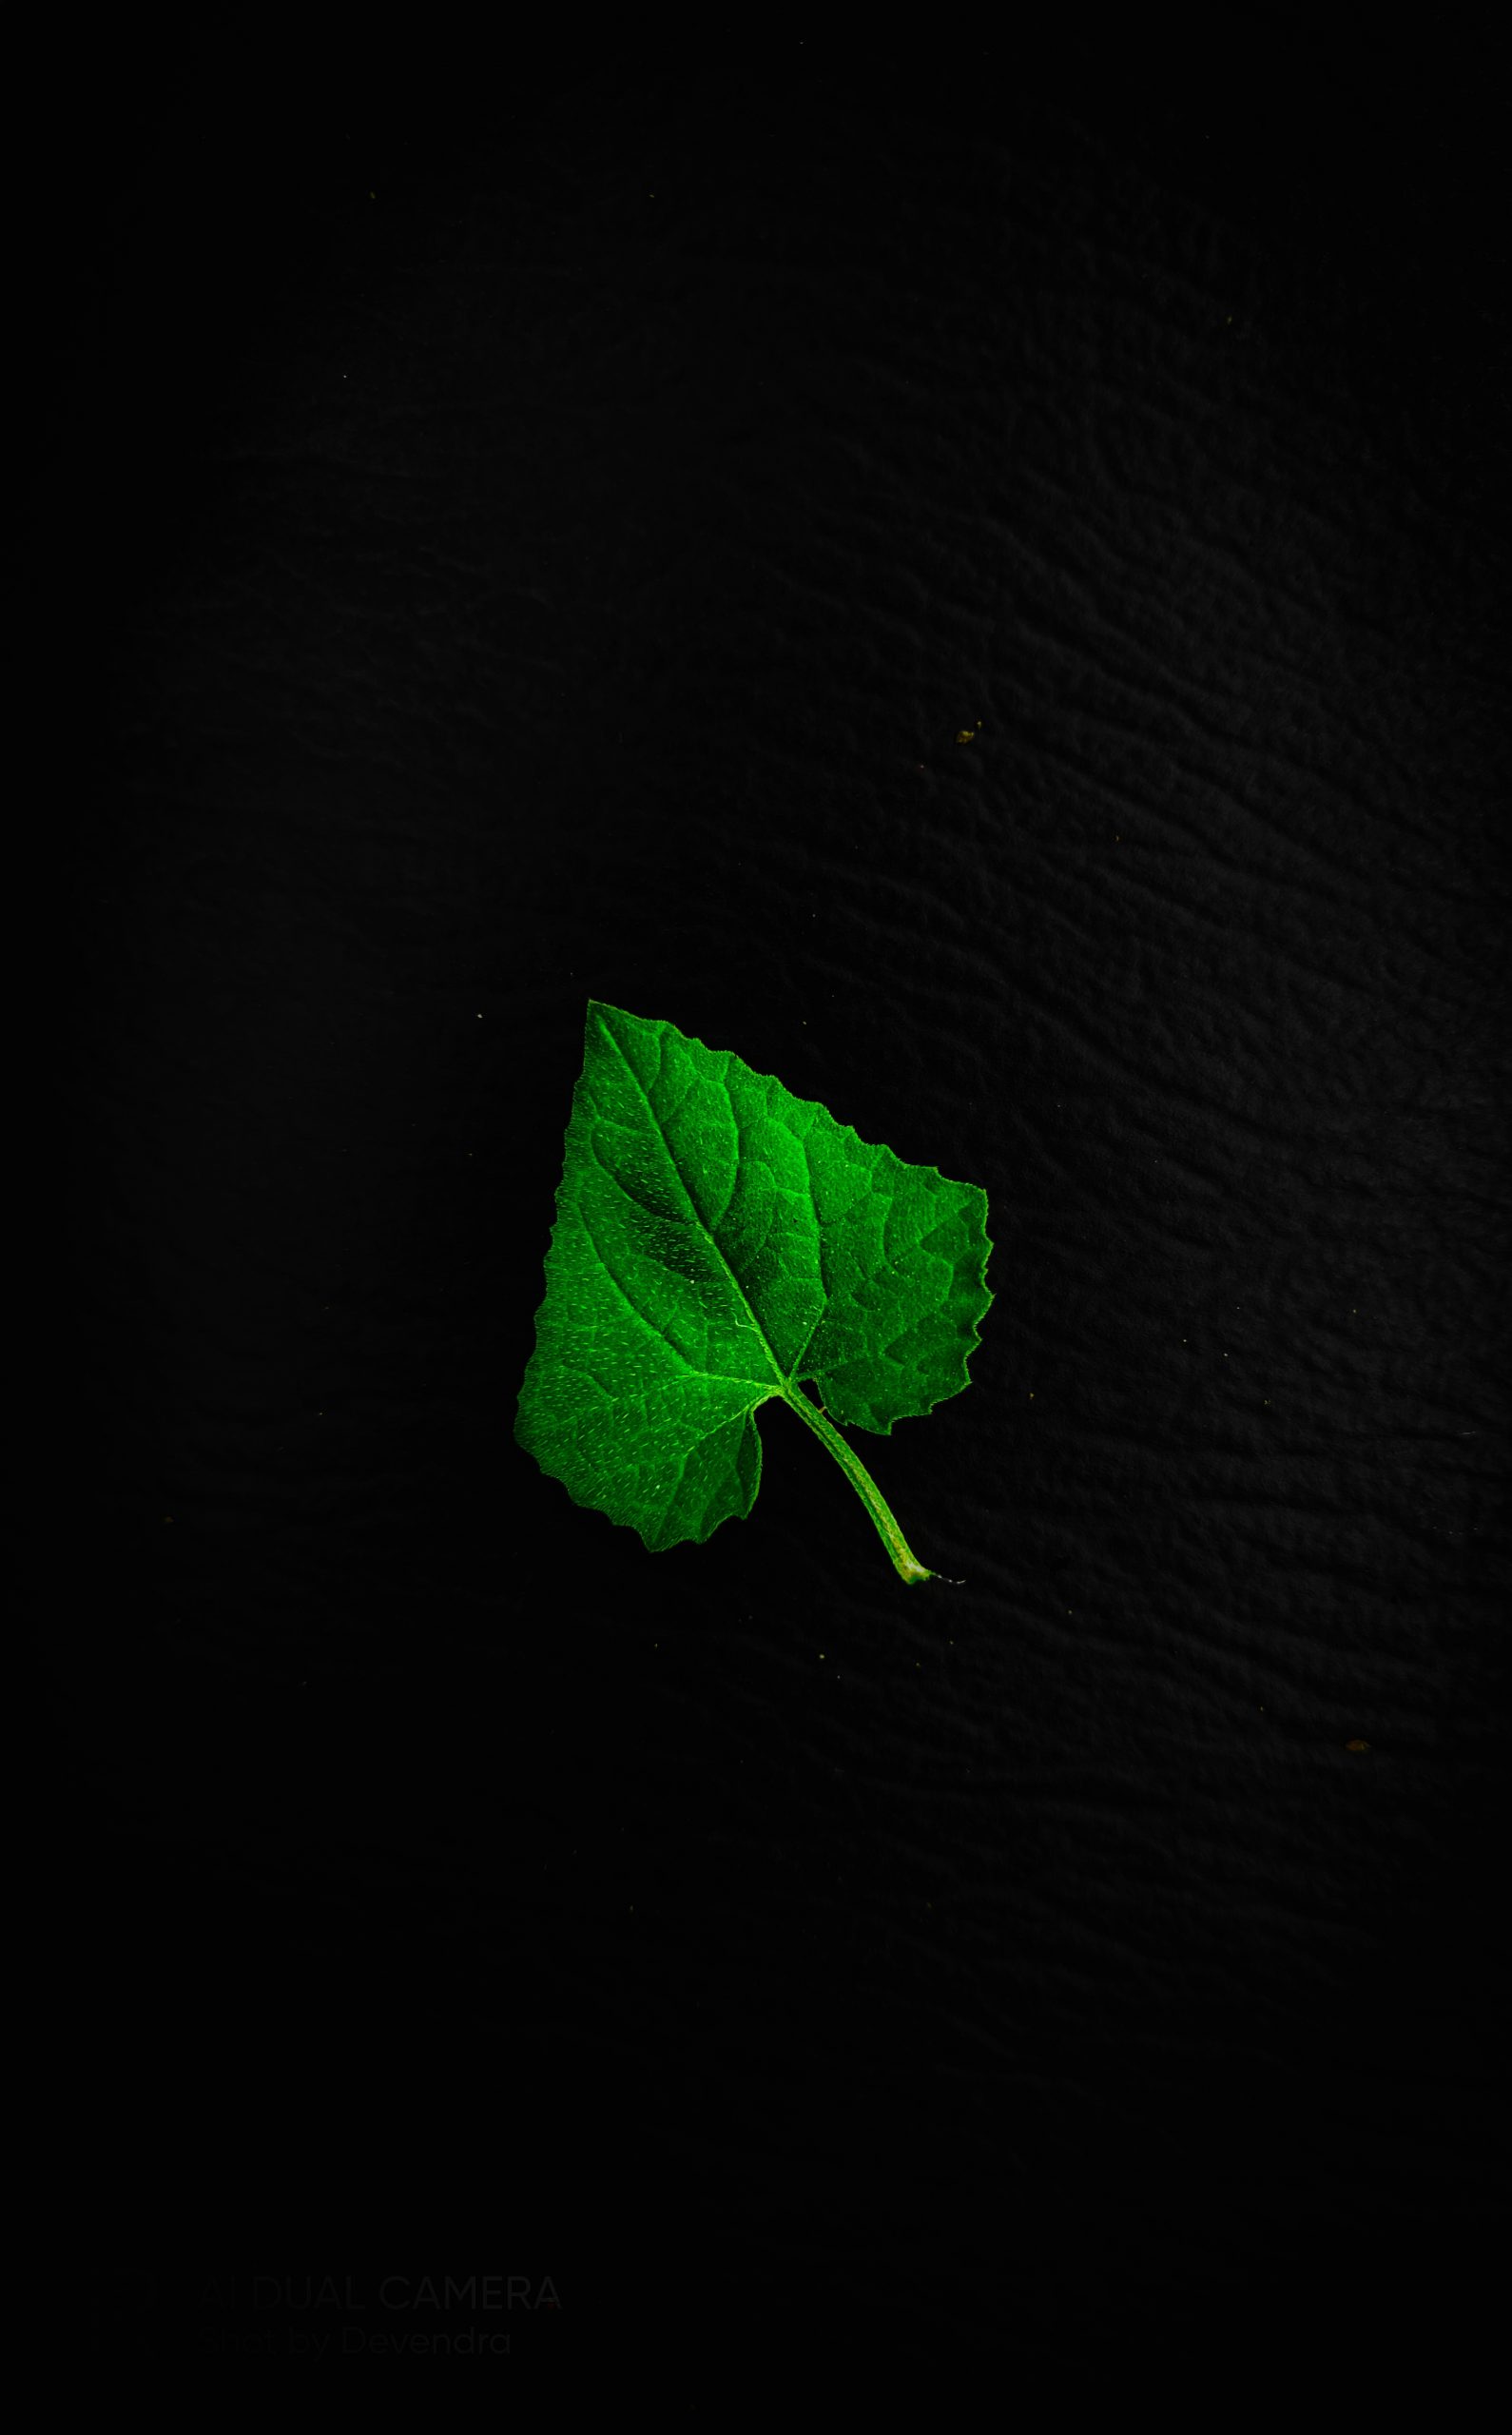 Leaf with black background